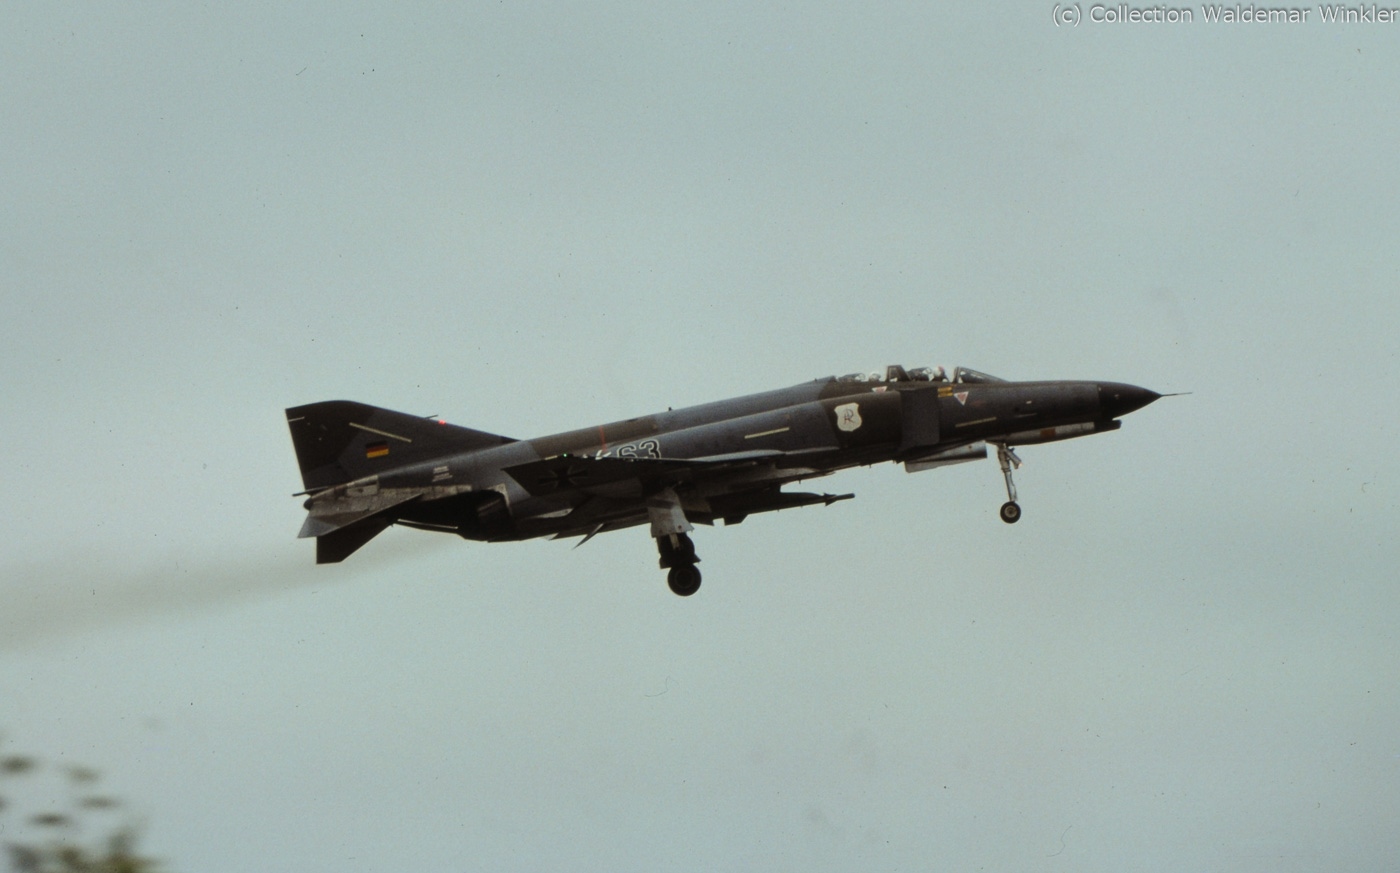 F-4_Phantom_II_DSC_1423.jpg